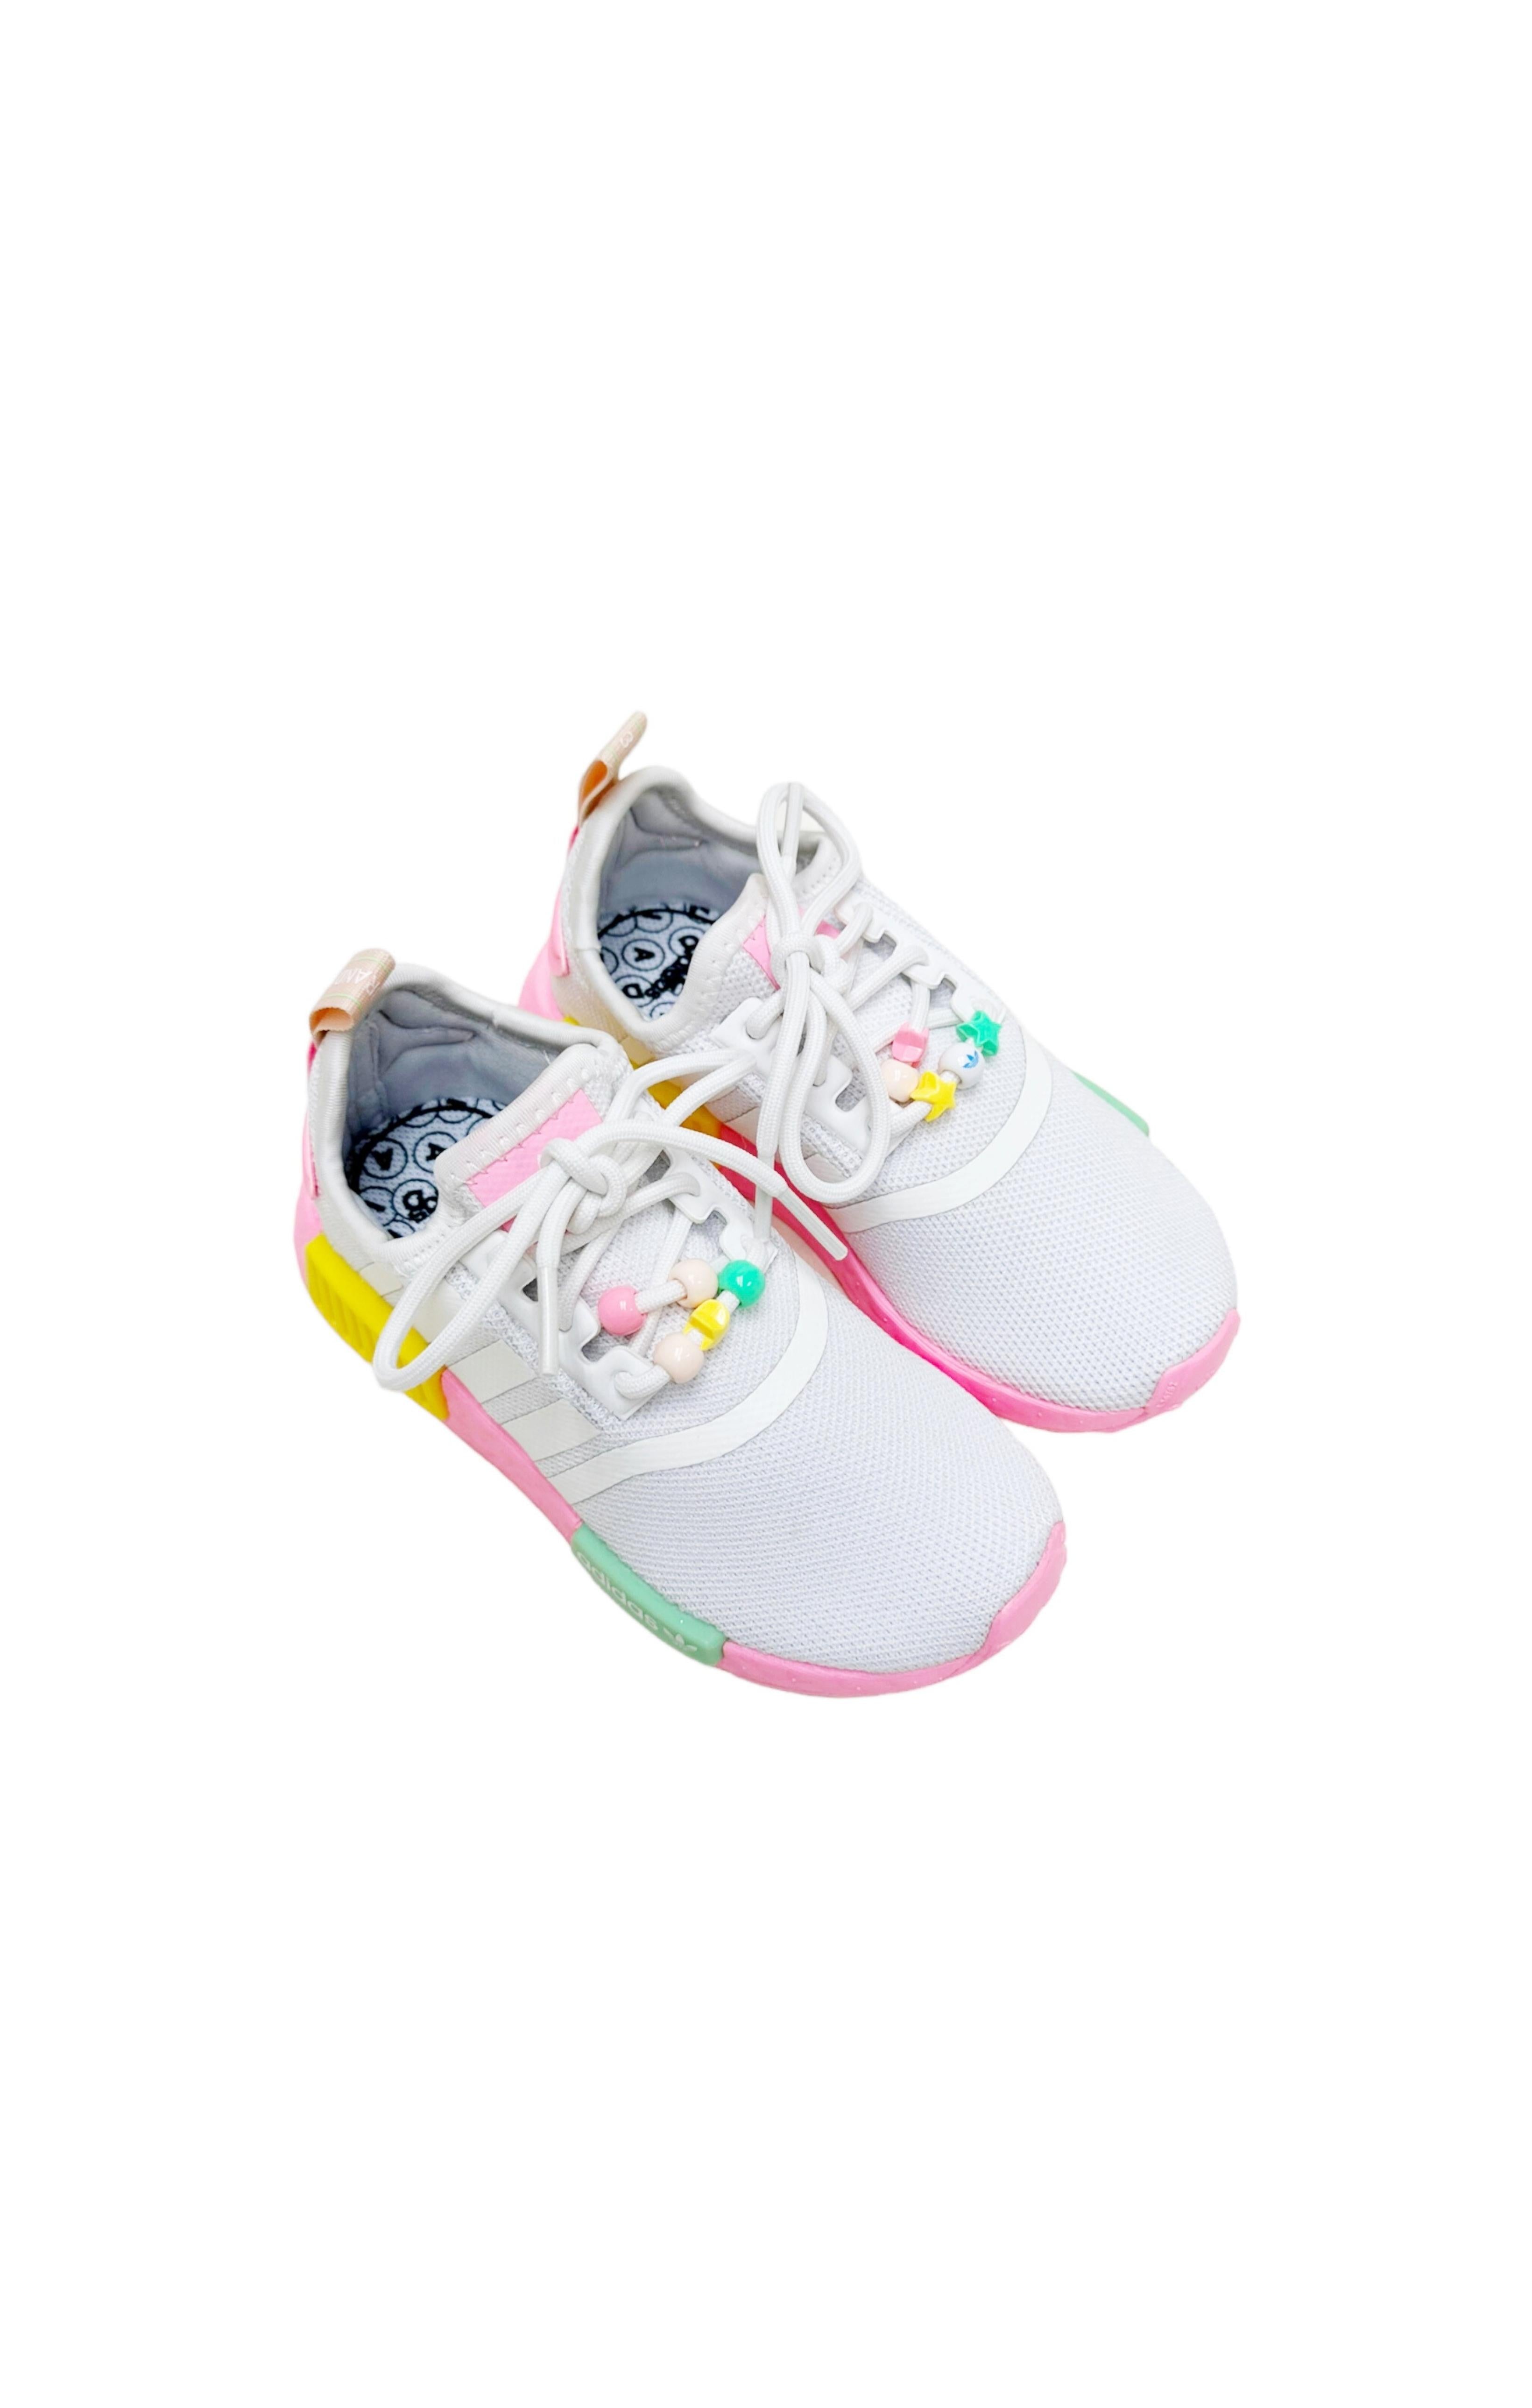 ADIDAS (RARE) Sneakers Size: Toddler US 11K